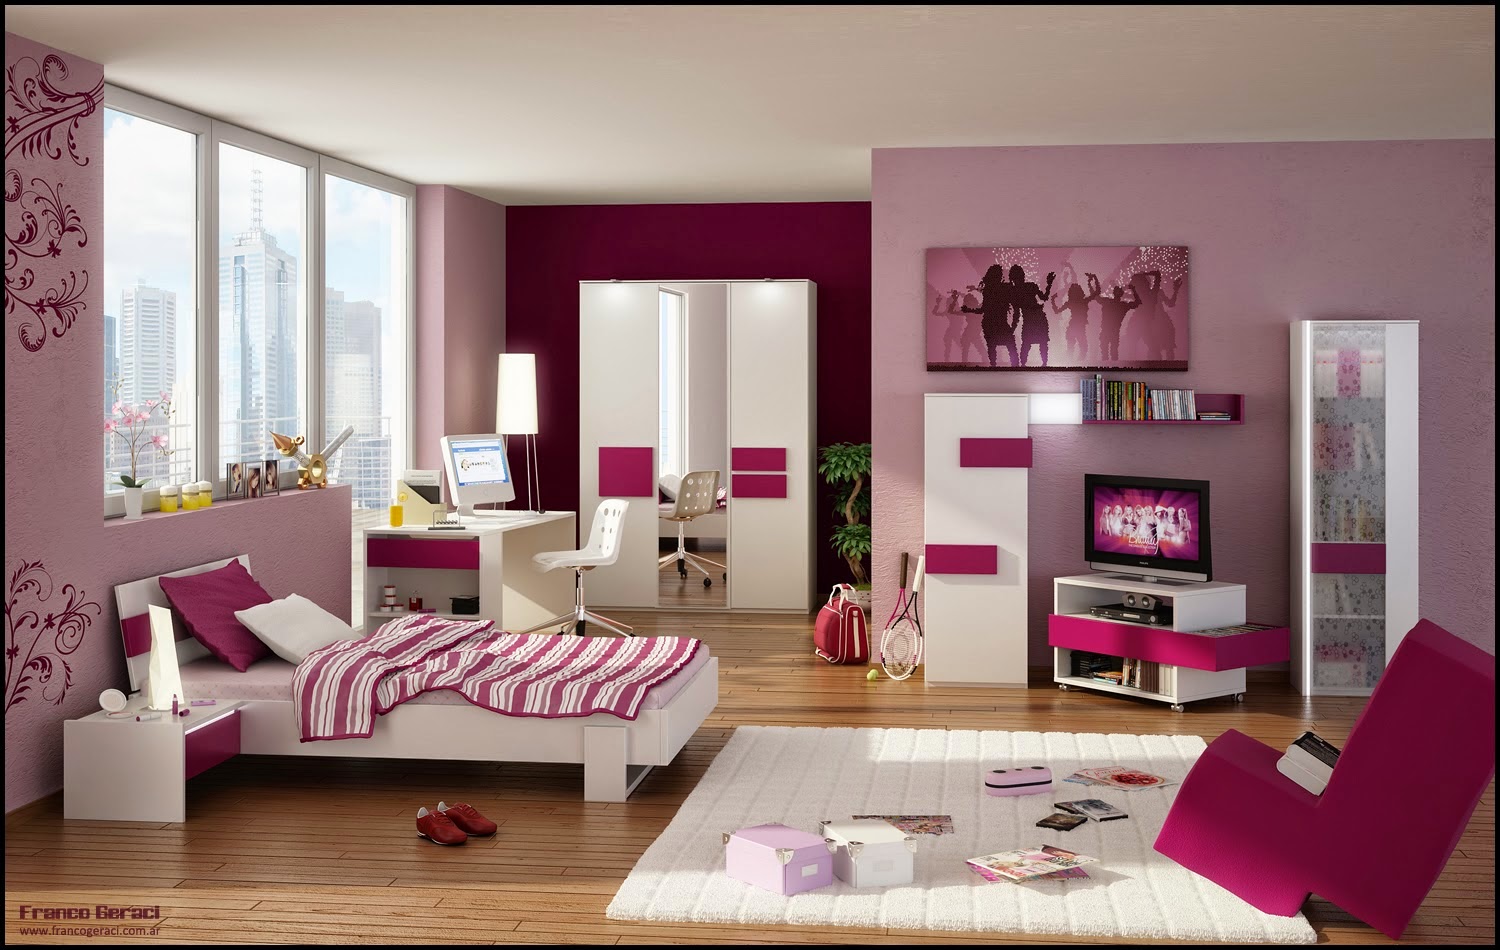 Popular designs bedroom